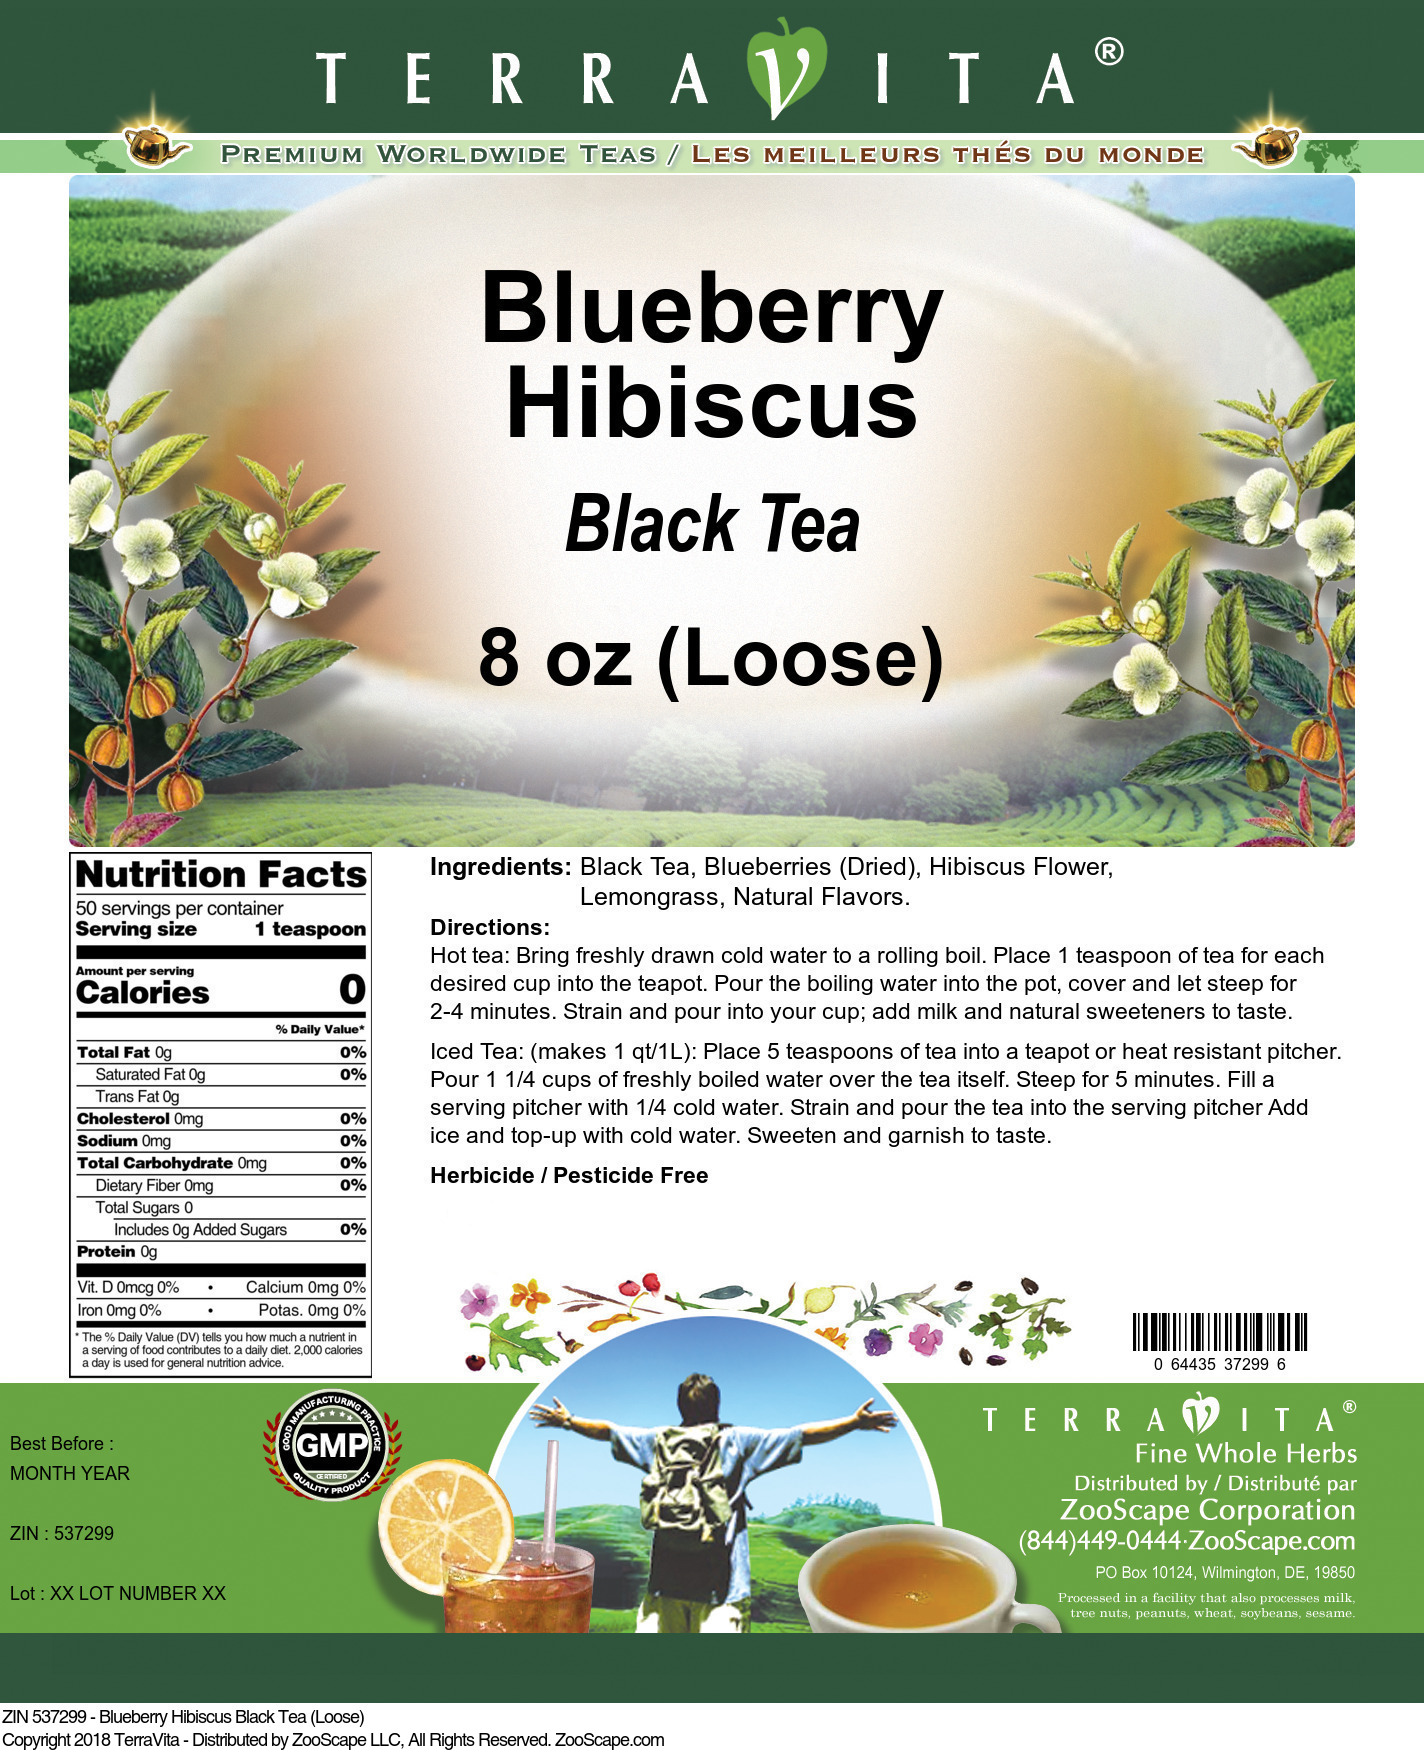 Blueberry Hibiscus Black Tea (Loose) - Label